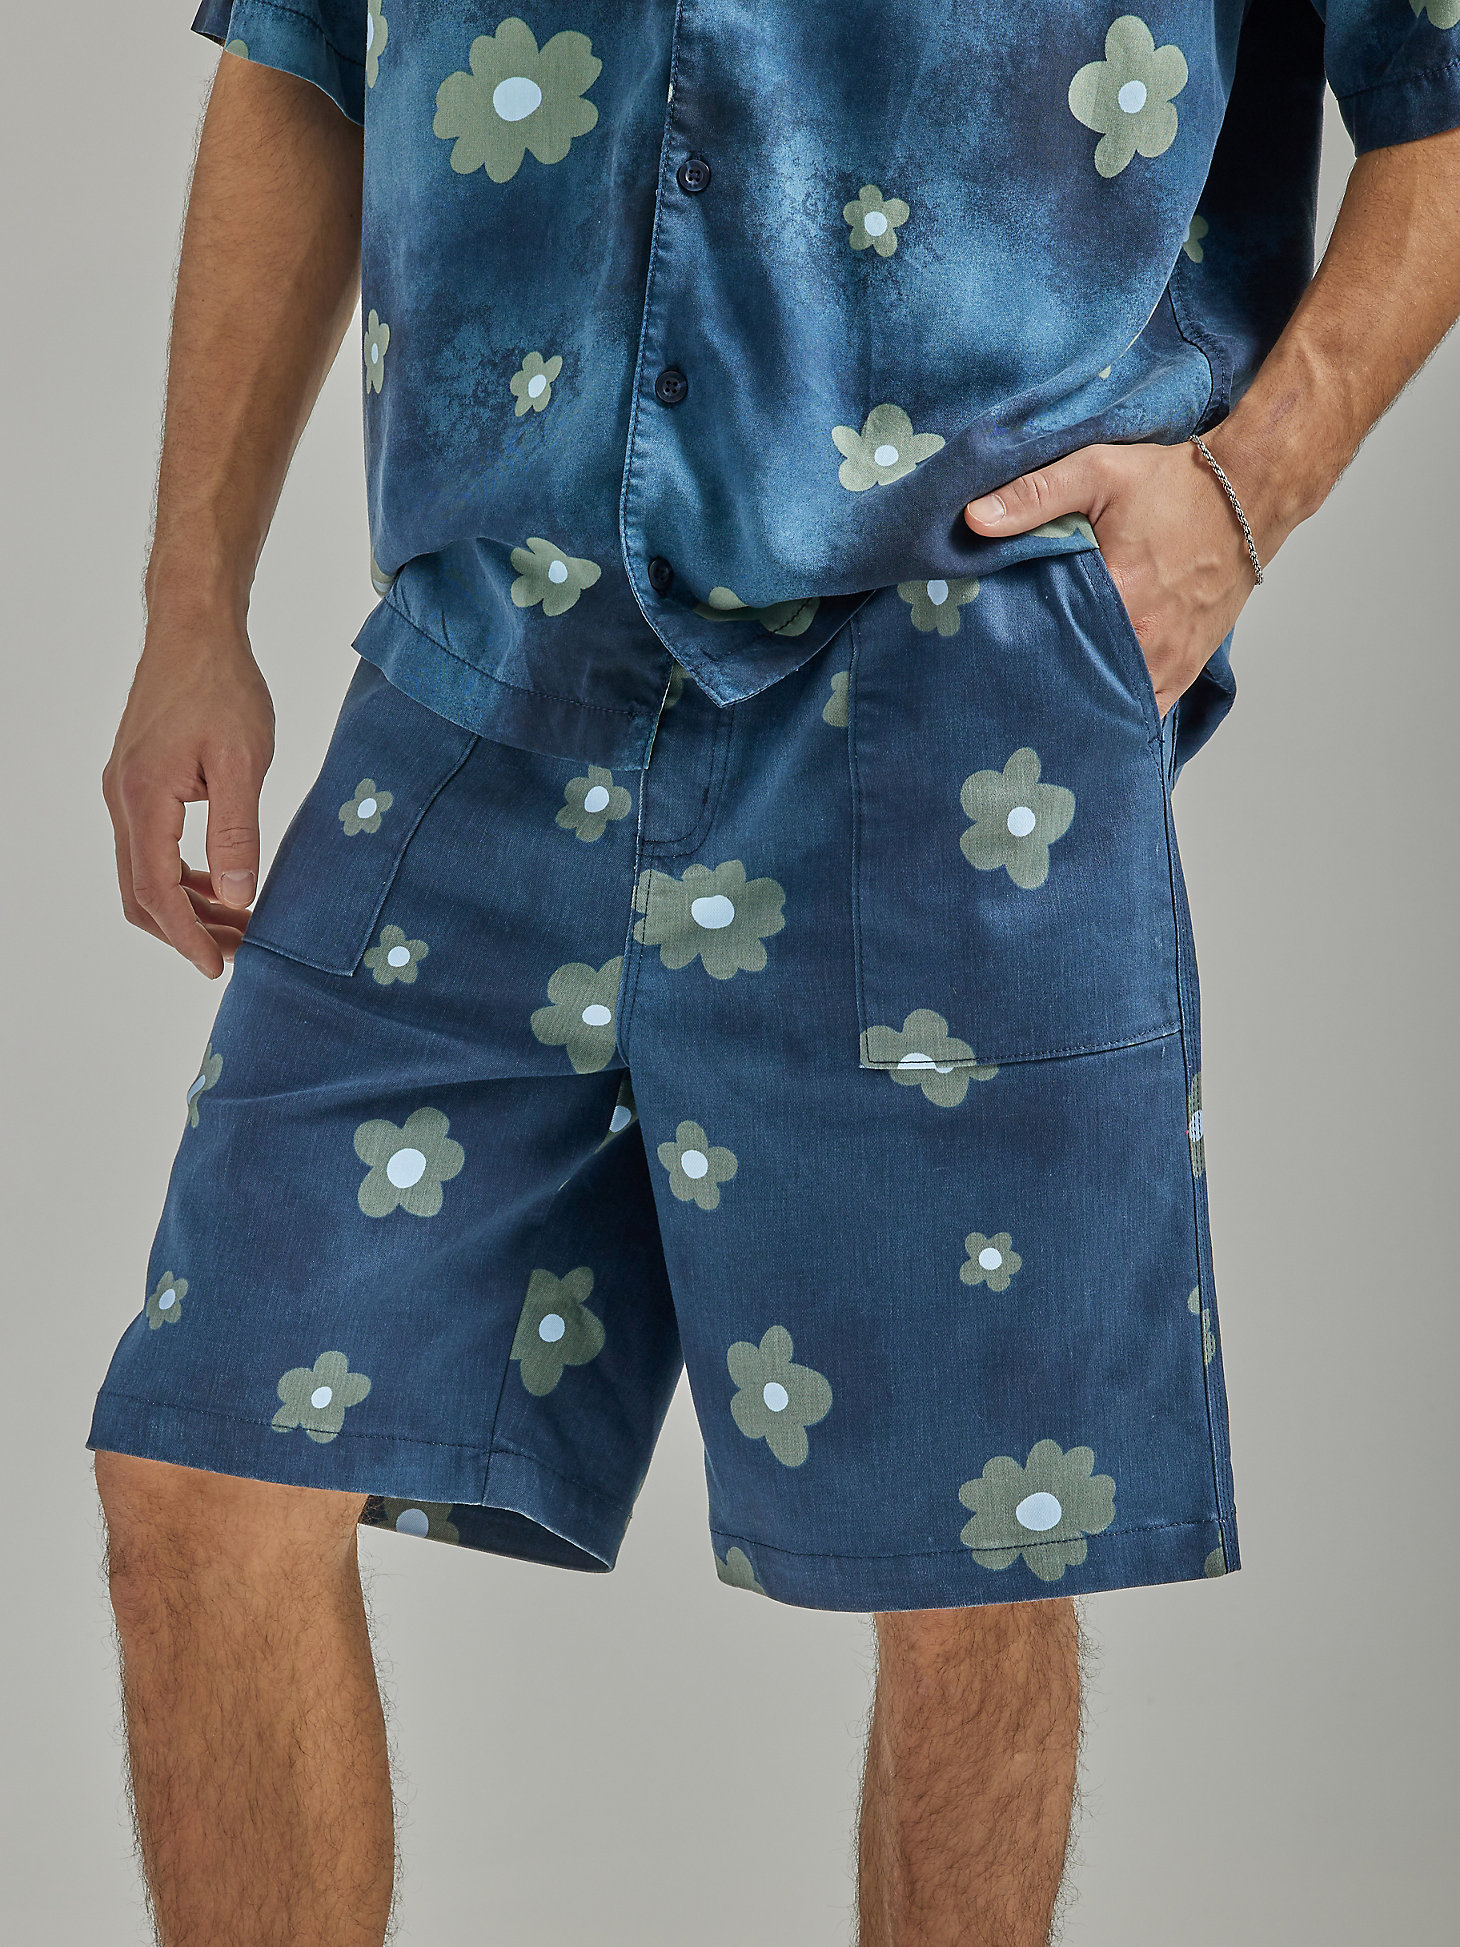 Men's Chetopa Pleated Front Short in Rivet Navy Floral alternative view 3